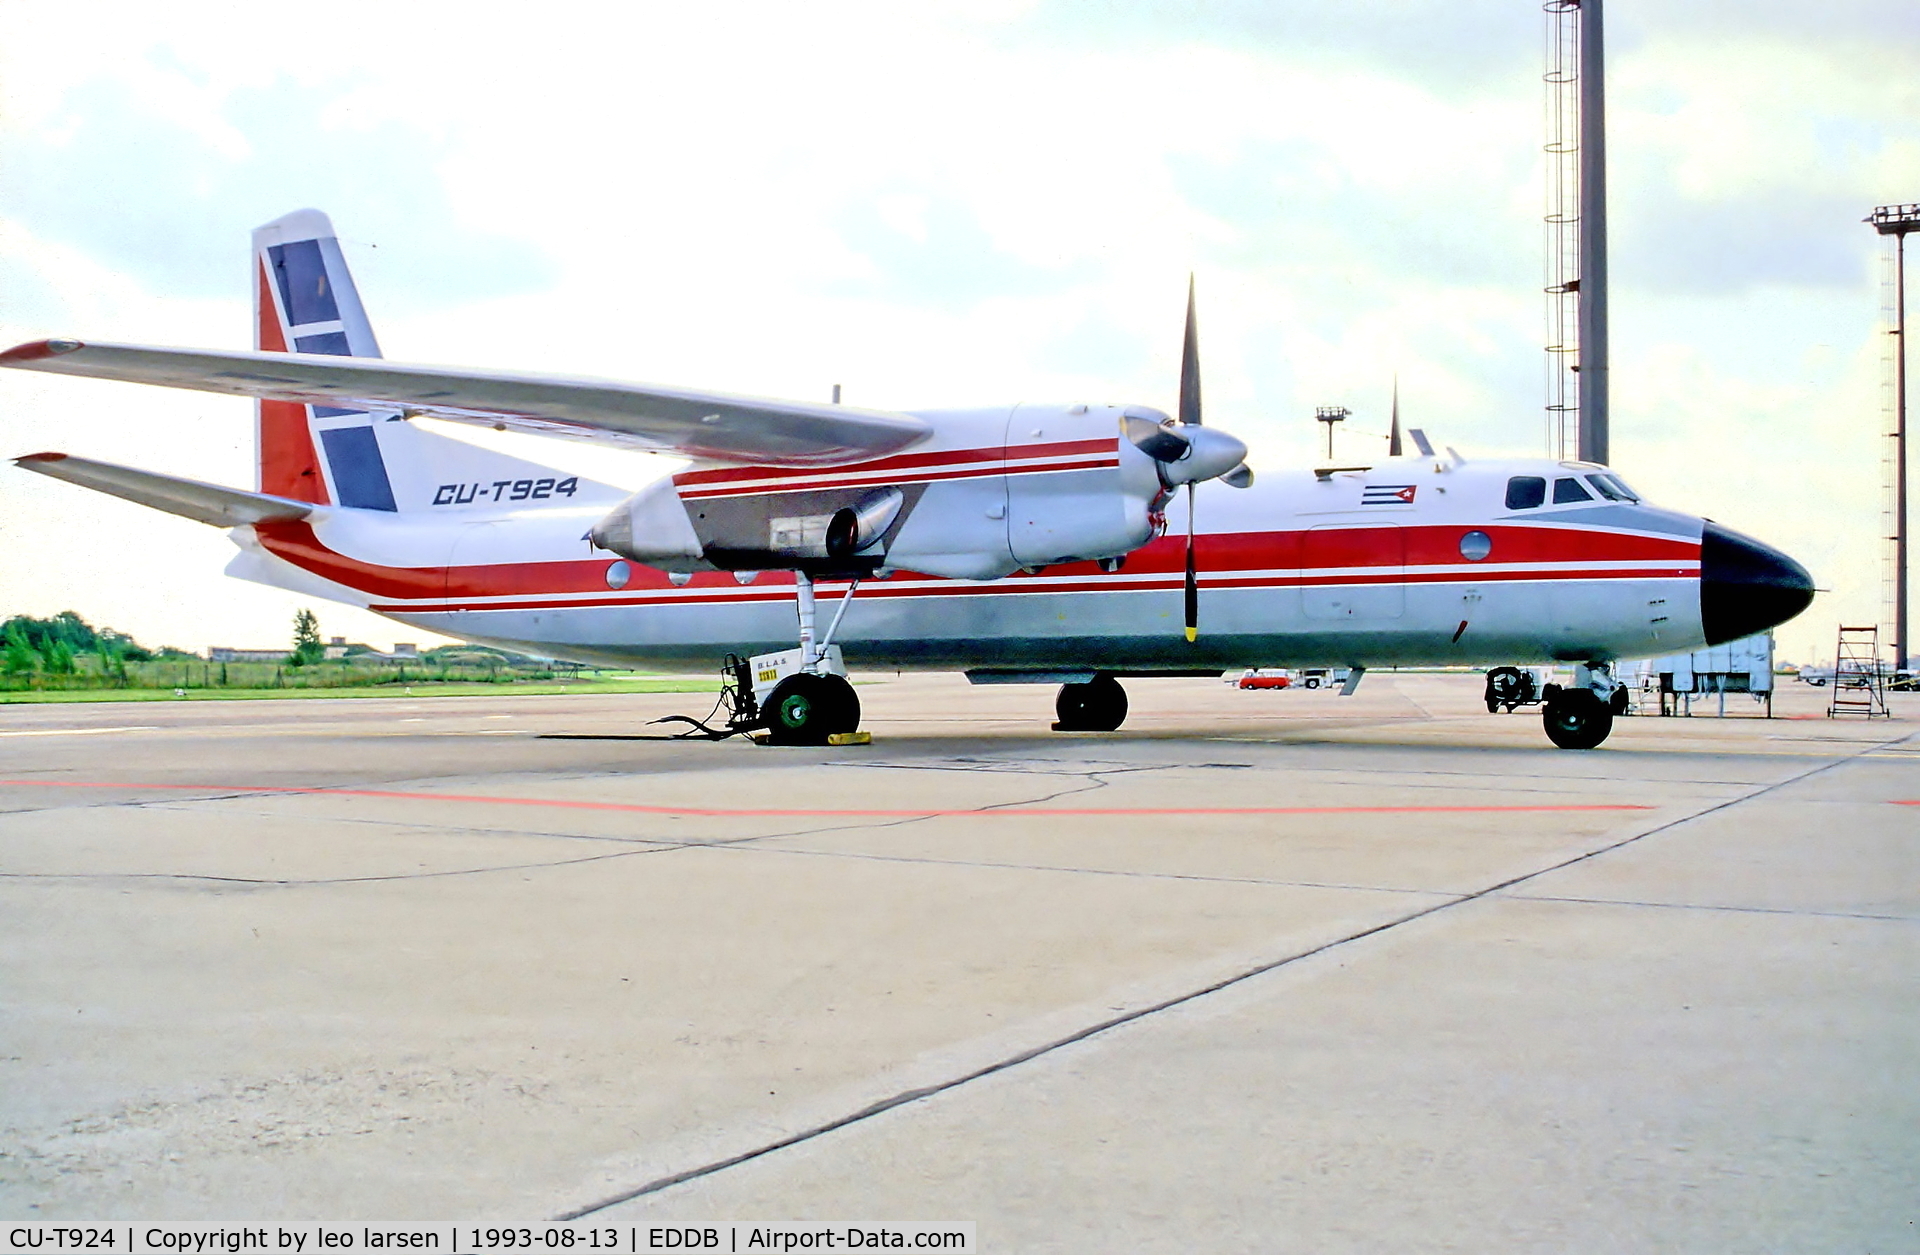 CU-T924, 1975 Antonov An-24RV C/N 47309405, Berlin SXF 13.8.93